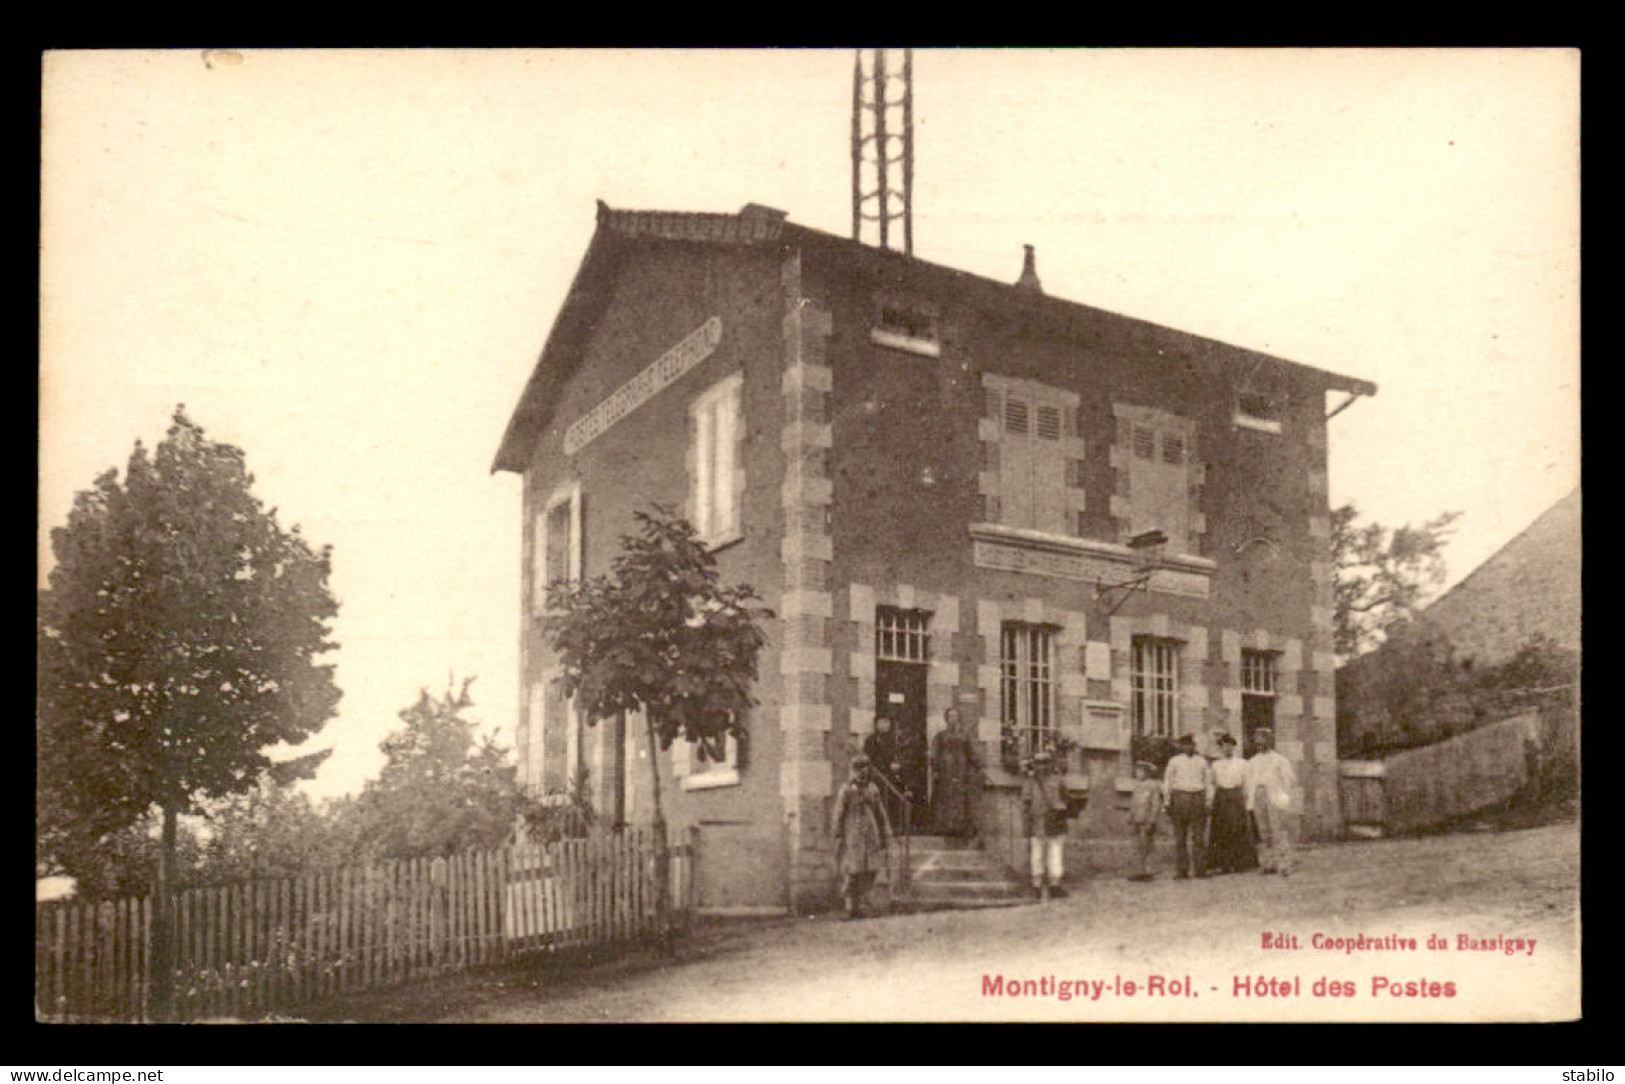 52 - MONTIGNY-LE-ROI - HOTEL DES POSTES - Montigny Le Roi